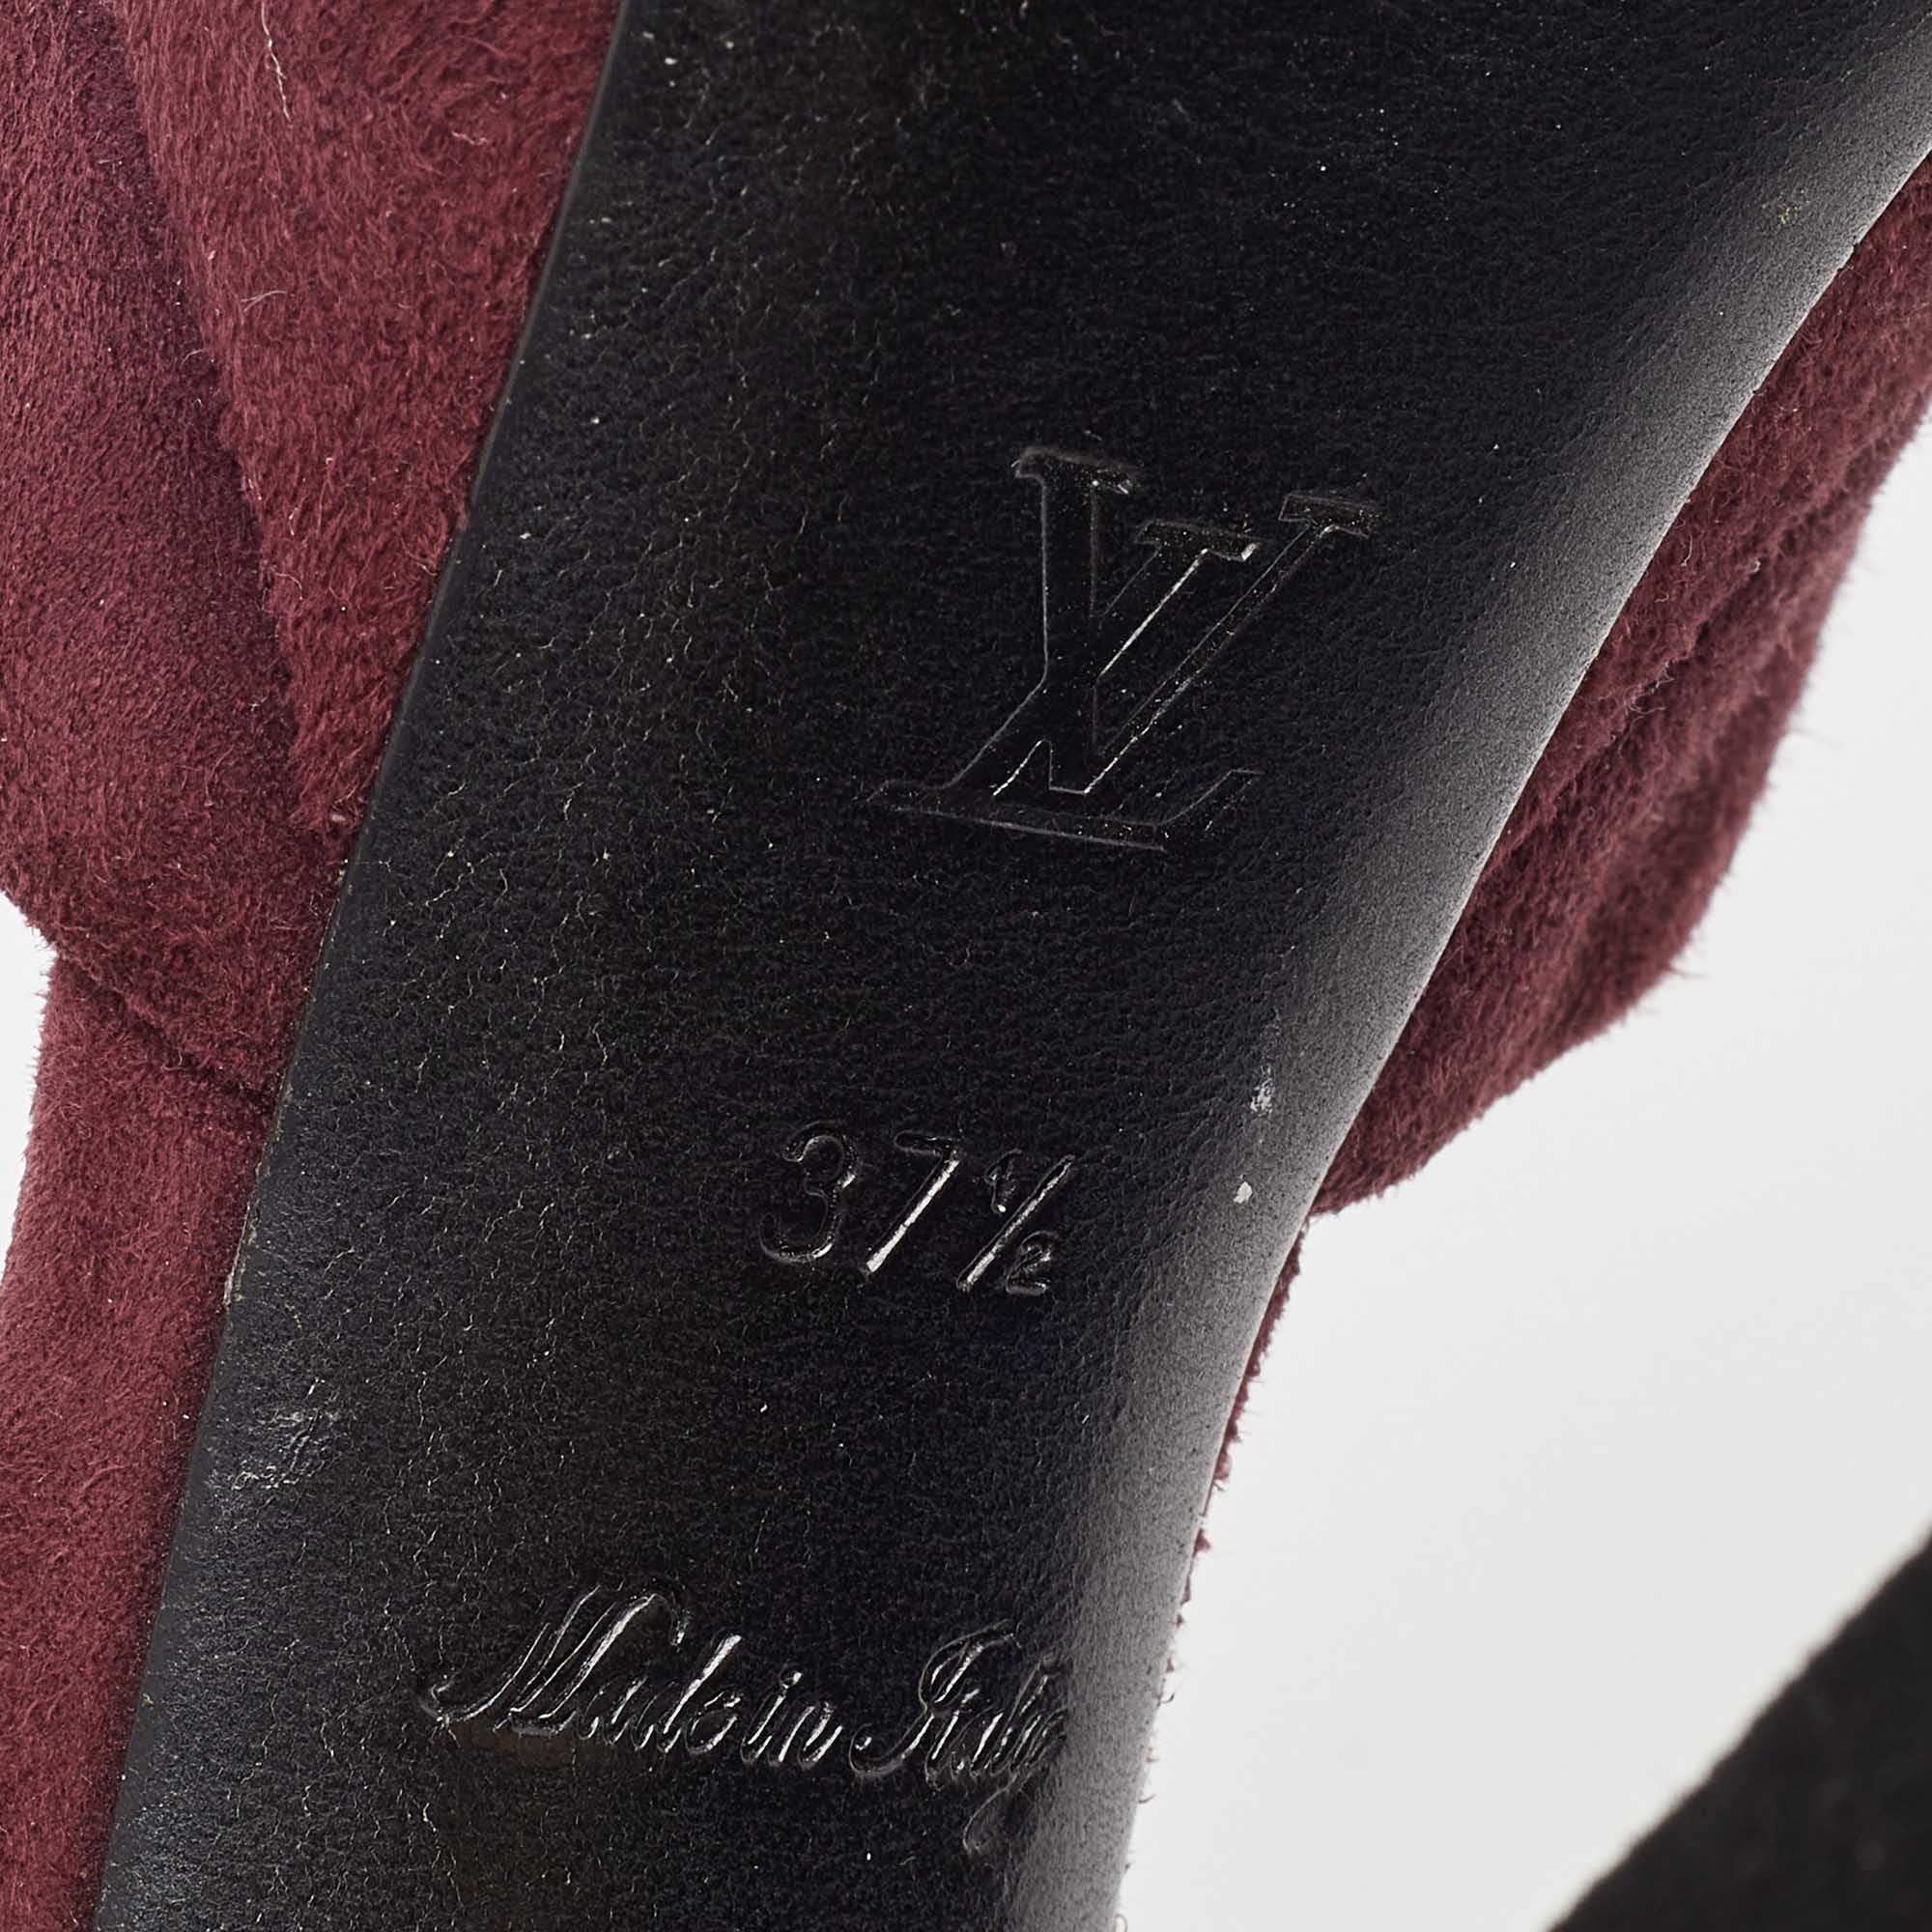 Louis Vuitton Burgundy/Black Suede Flower Peep Toe Platform Ankle Strap Sandals Size 37.5